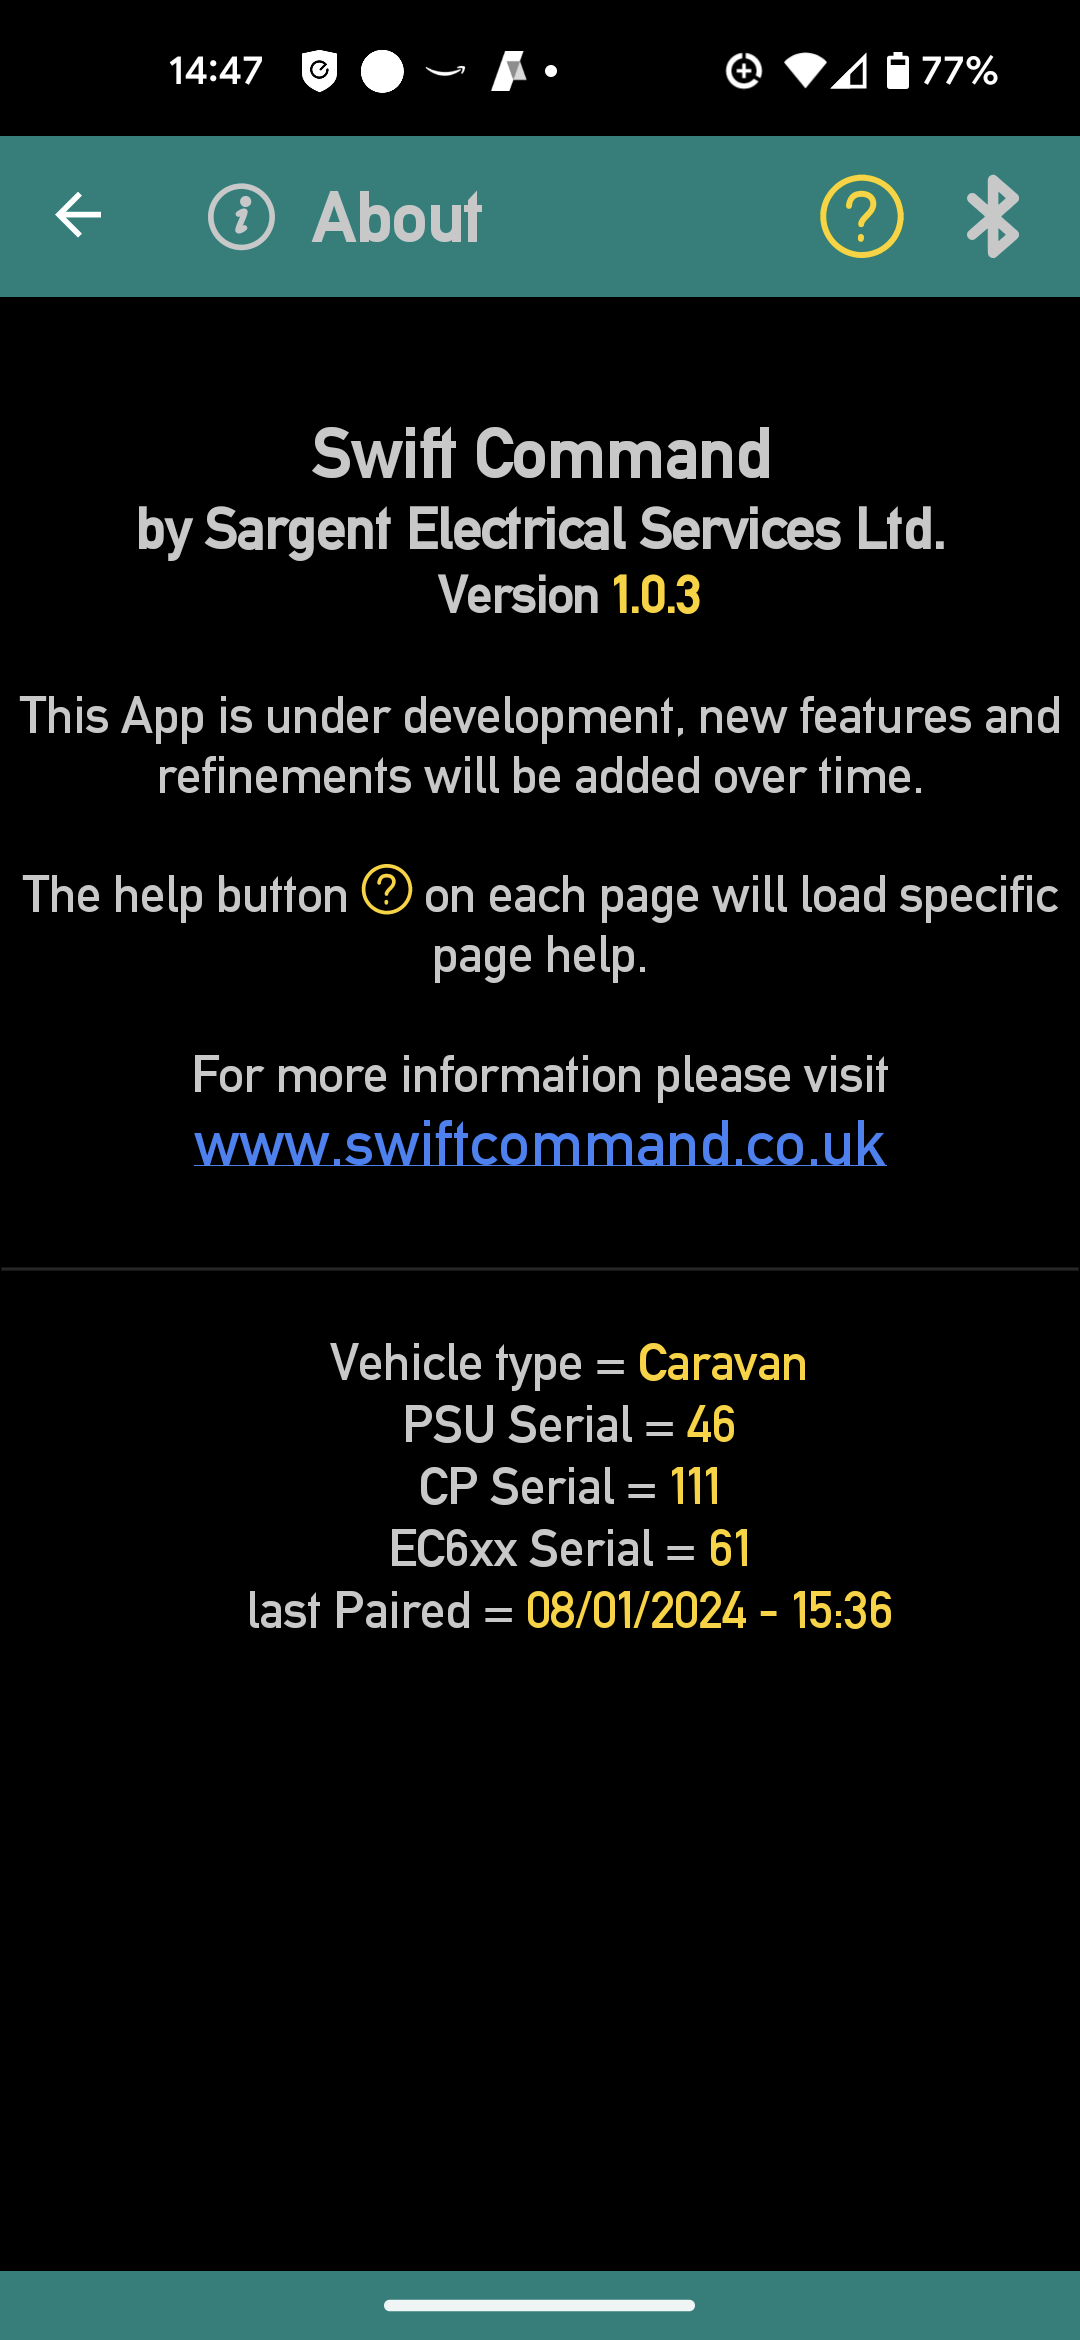 Swift Command App 2019